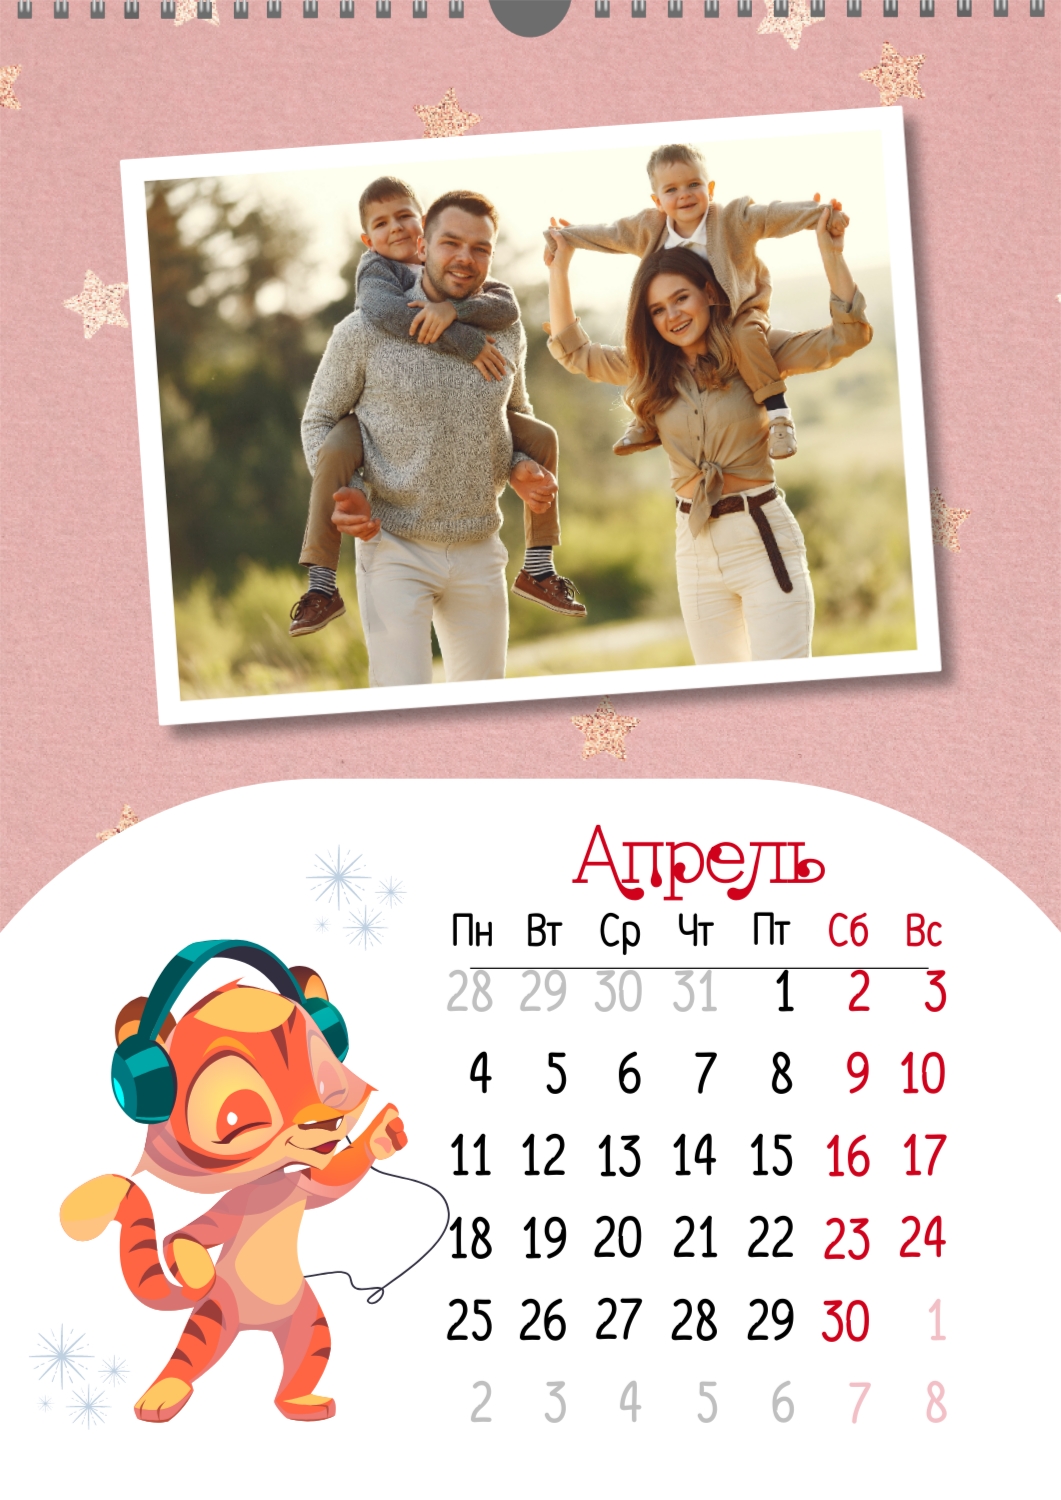 Шаблон календаря с детскими фотографиями | Vizitka.com | ID99472